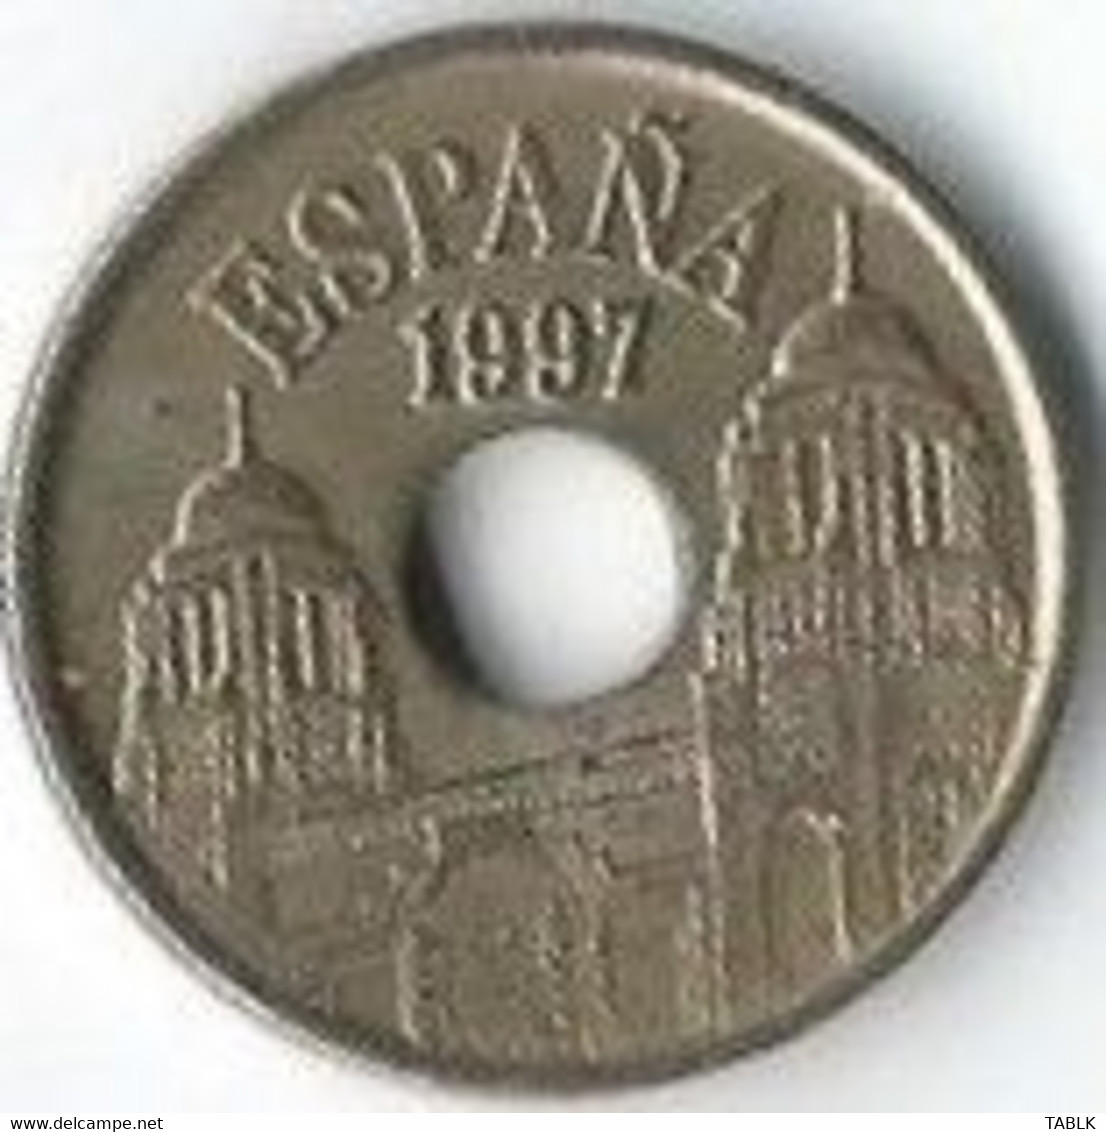 MM361 - SPANJE - SPAIN - 25 PESETA 1997 - 25 Peseta